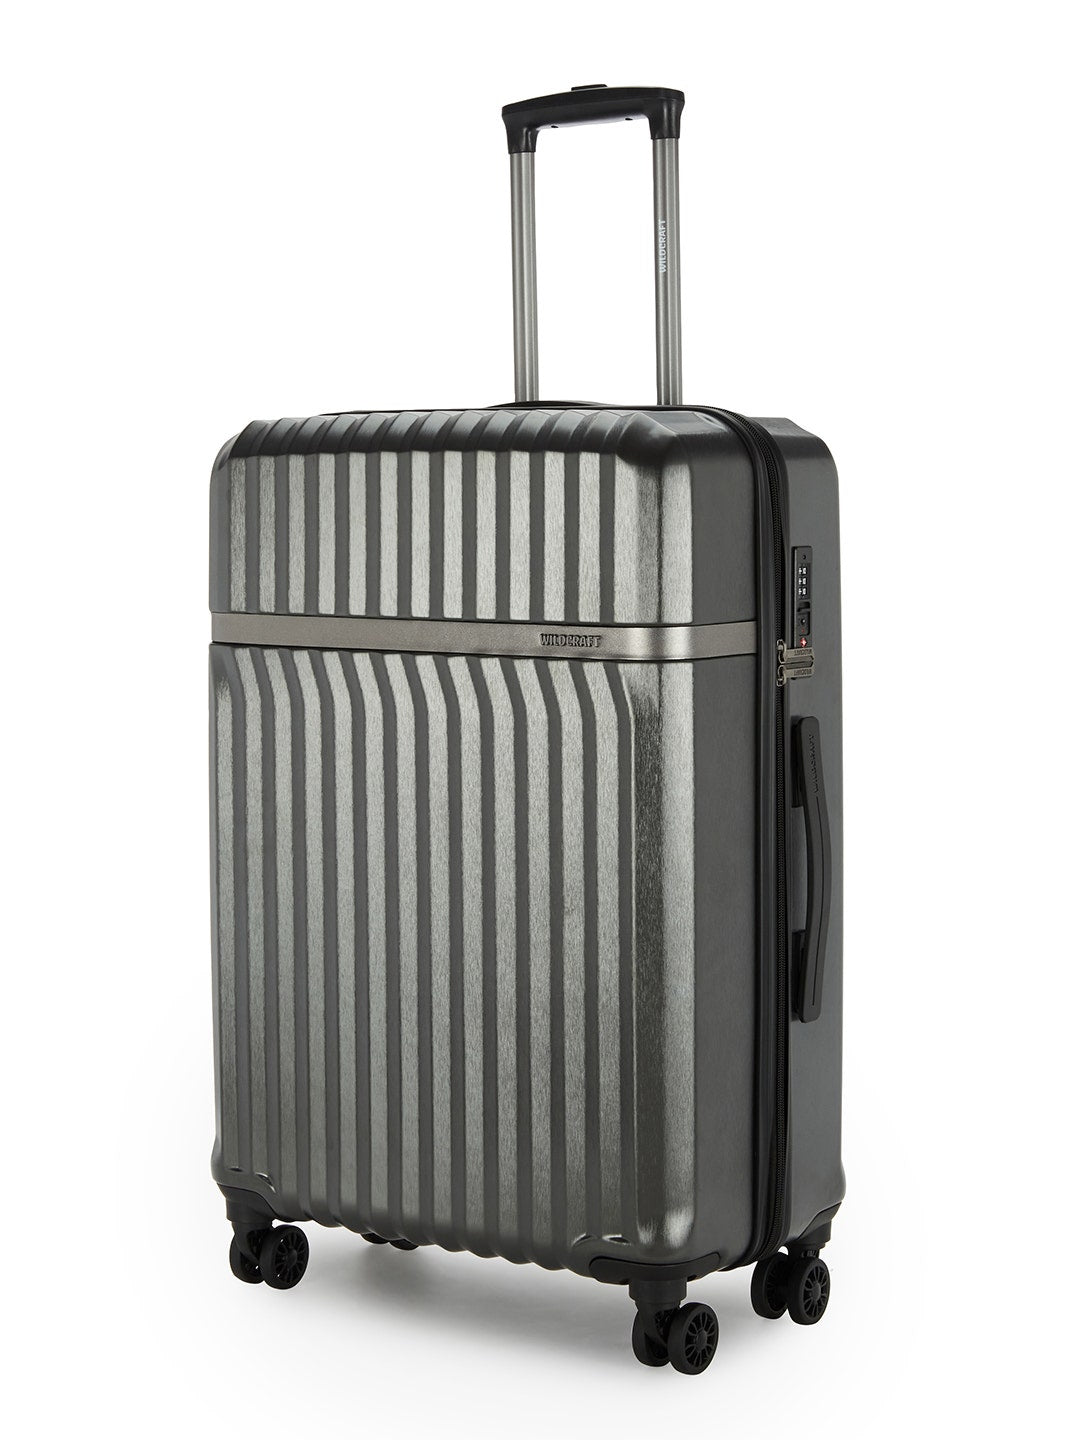 Wildcraft Canopus Hard Trolley Suitcase (12732)